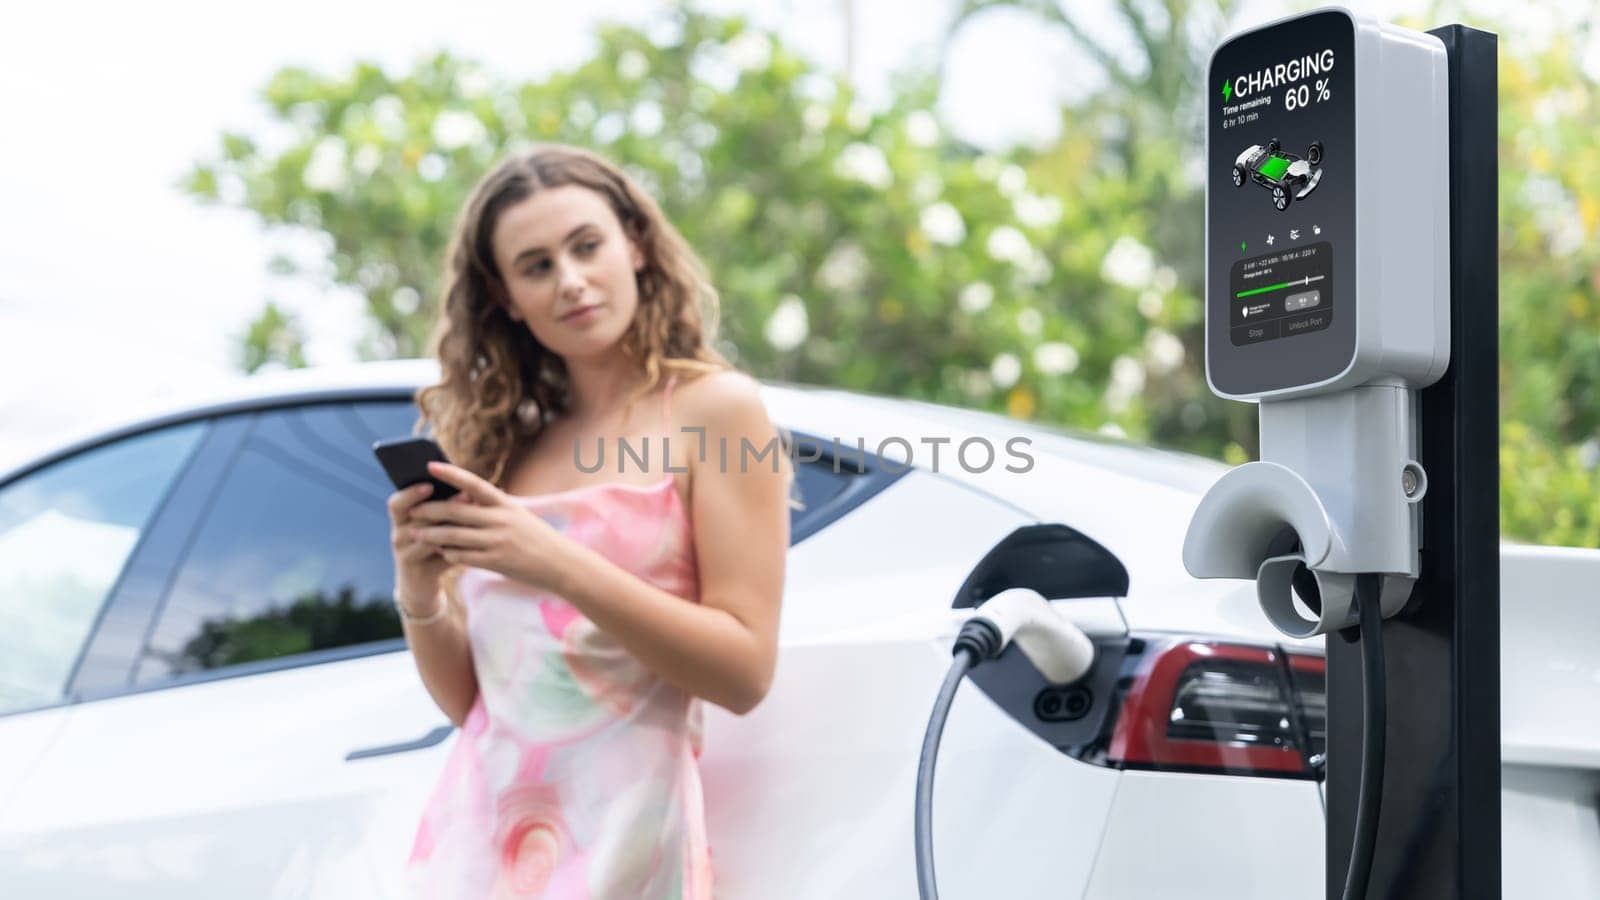 Focused charging station recharging EV car on blurred background. Synchronos by biancoblue